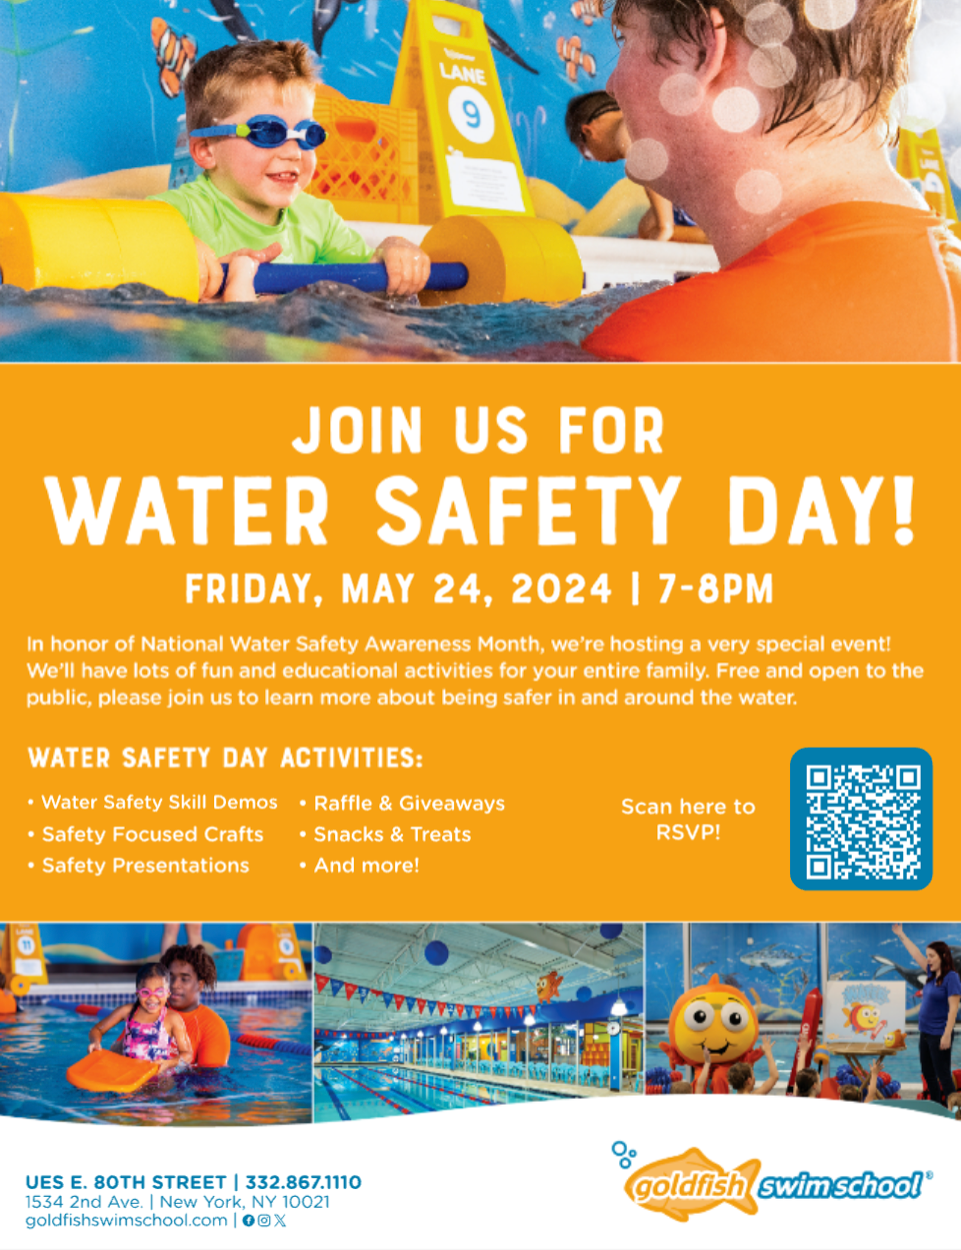 Goldfish Swim School's Water Safety Event